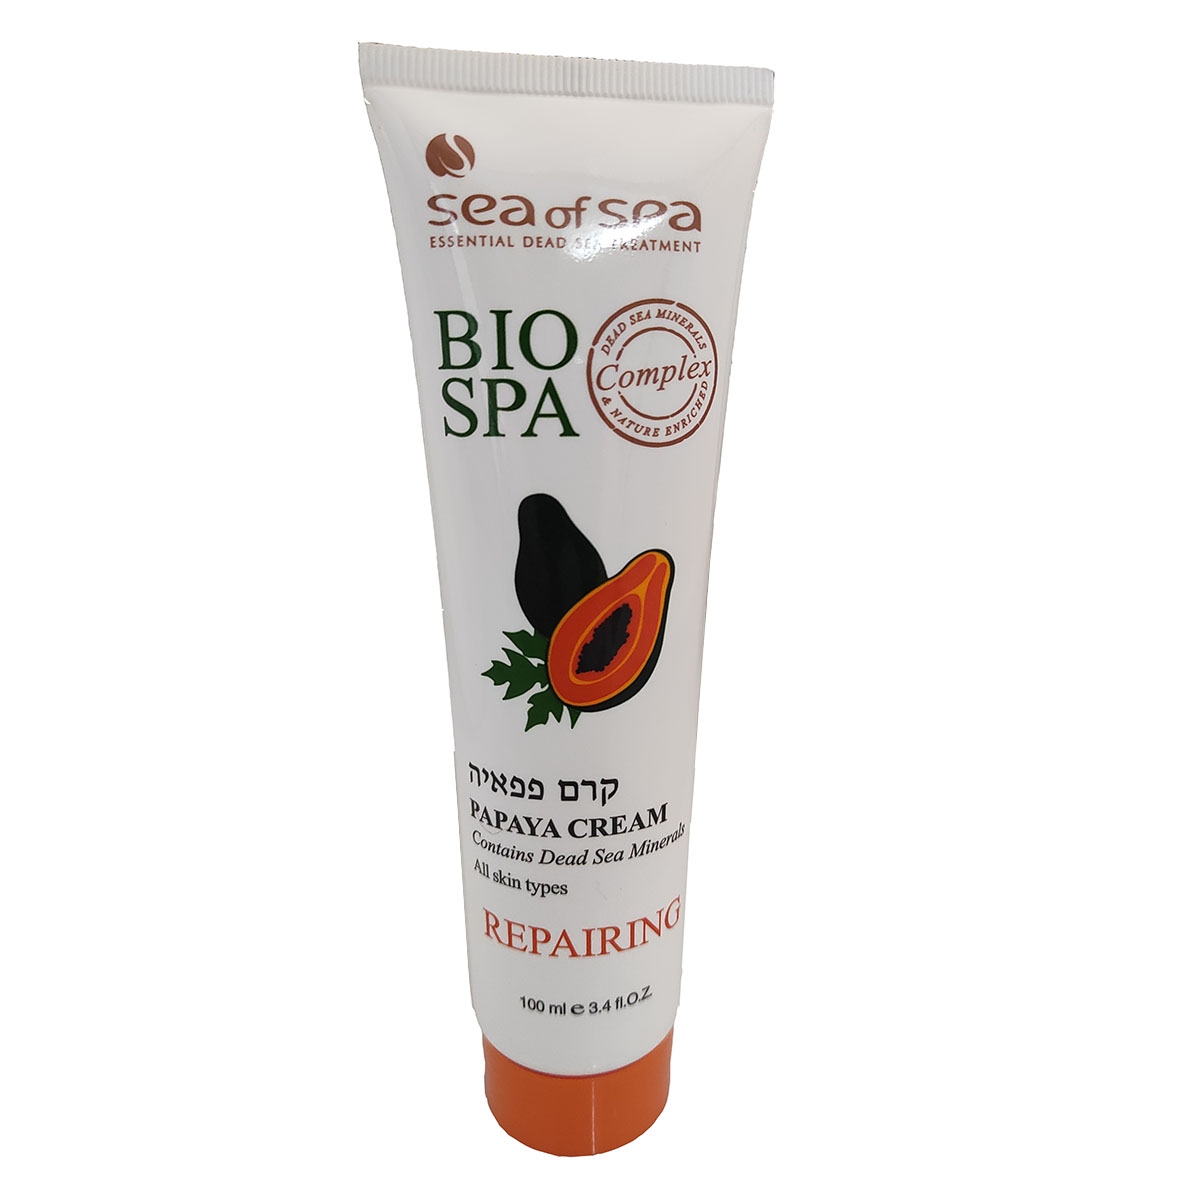 Sea of Spa Bio Spa Dead Sea Minerals Multi-Purpose Skin Cream With Papaya Extract – For Rejuvenating and Rebuilding Skin Cells - 1